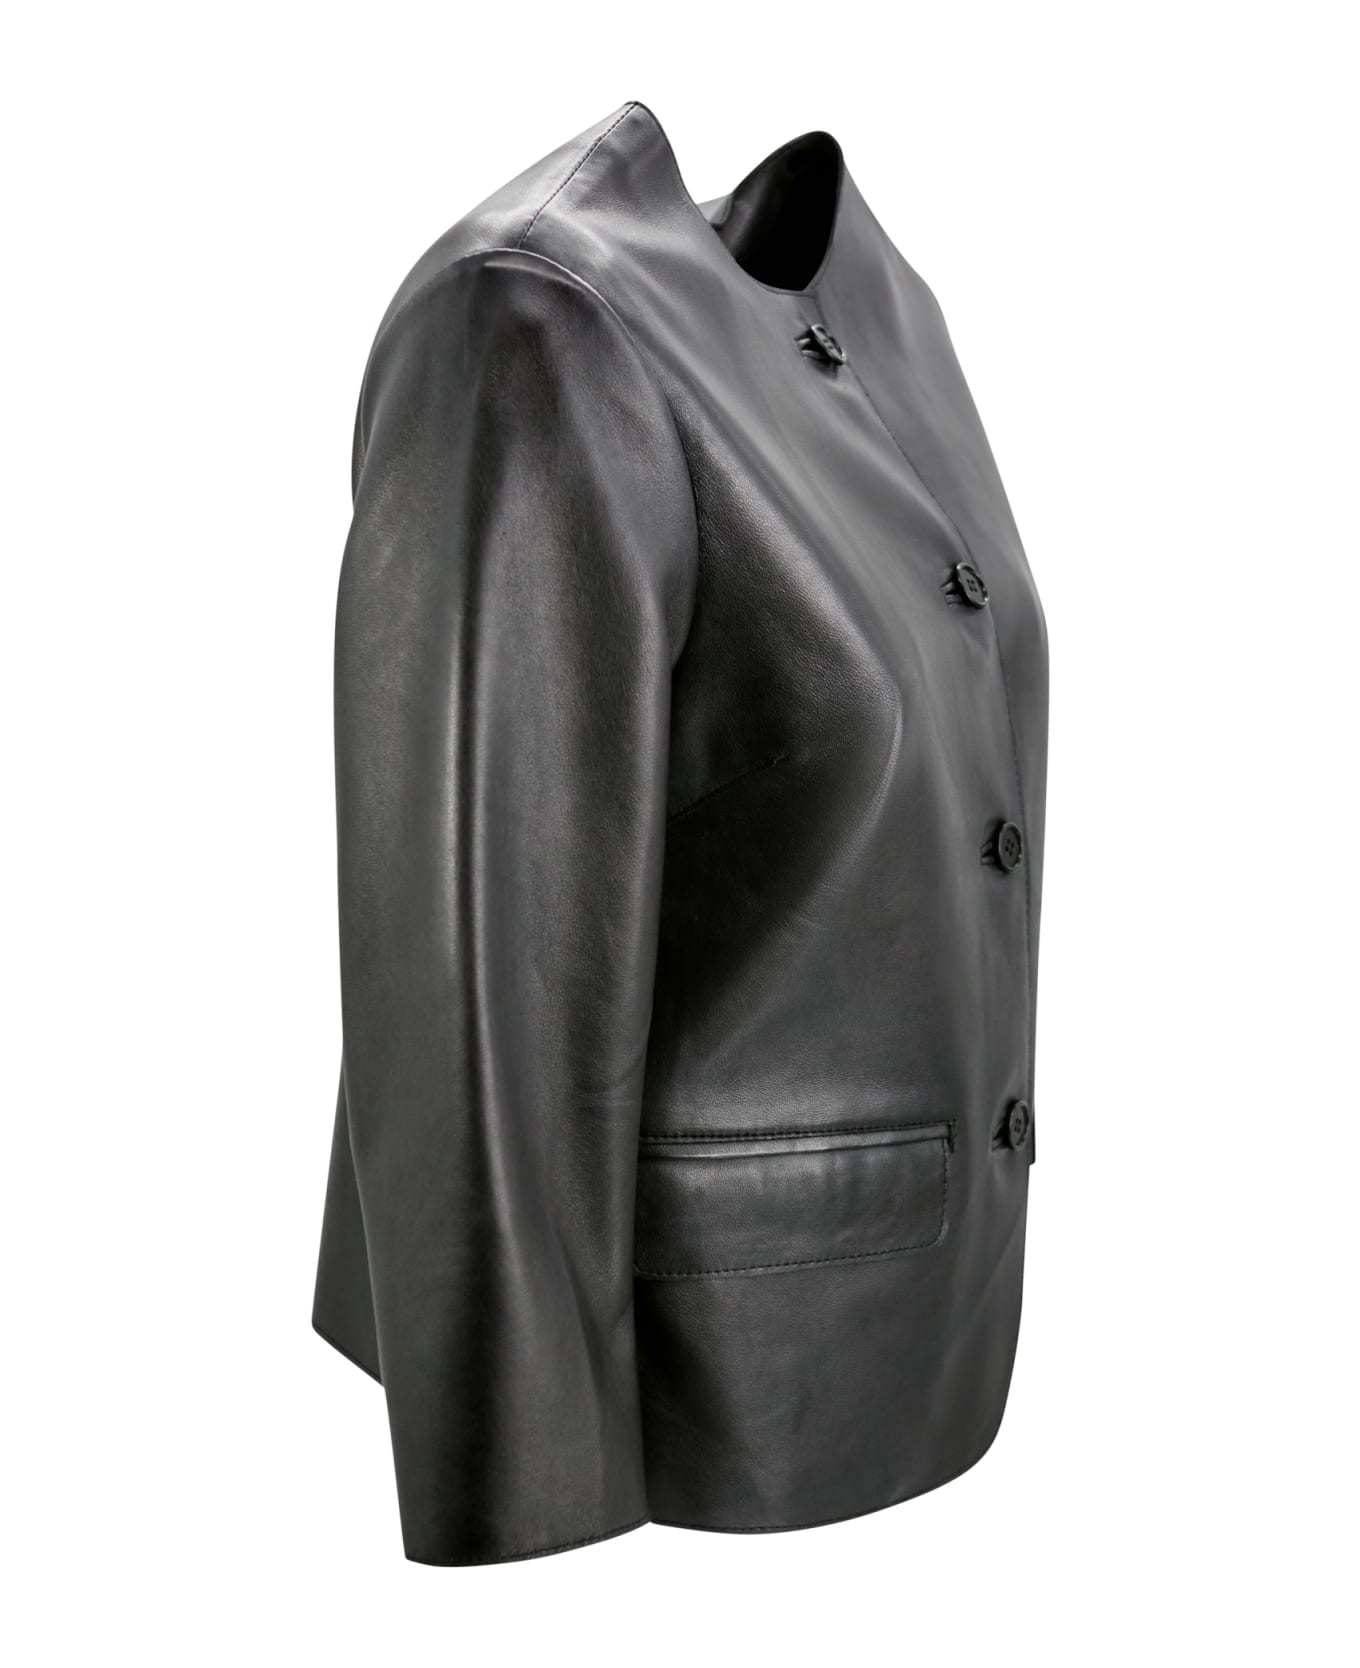 Parosh Cropped Button-up Leather Jacket - Black